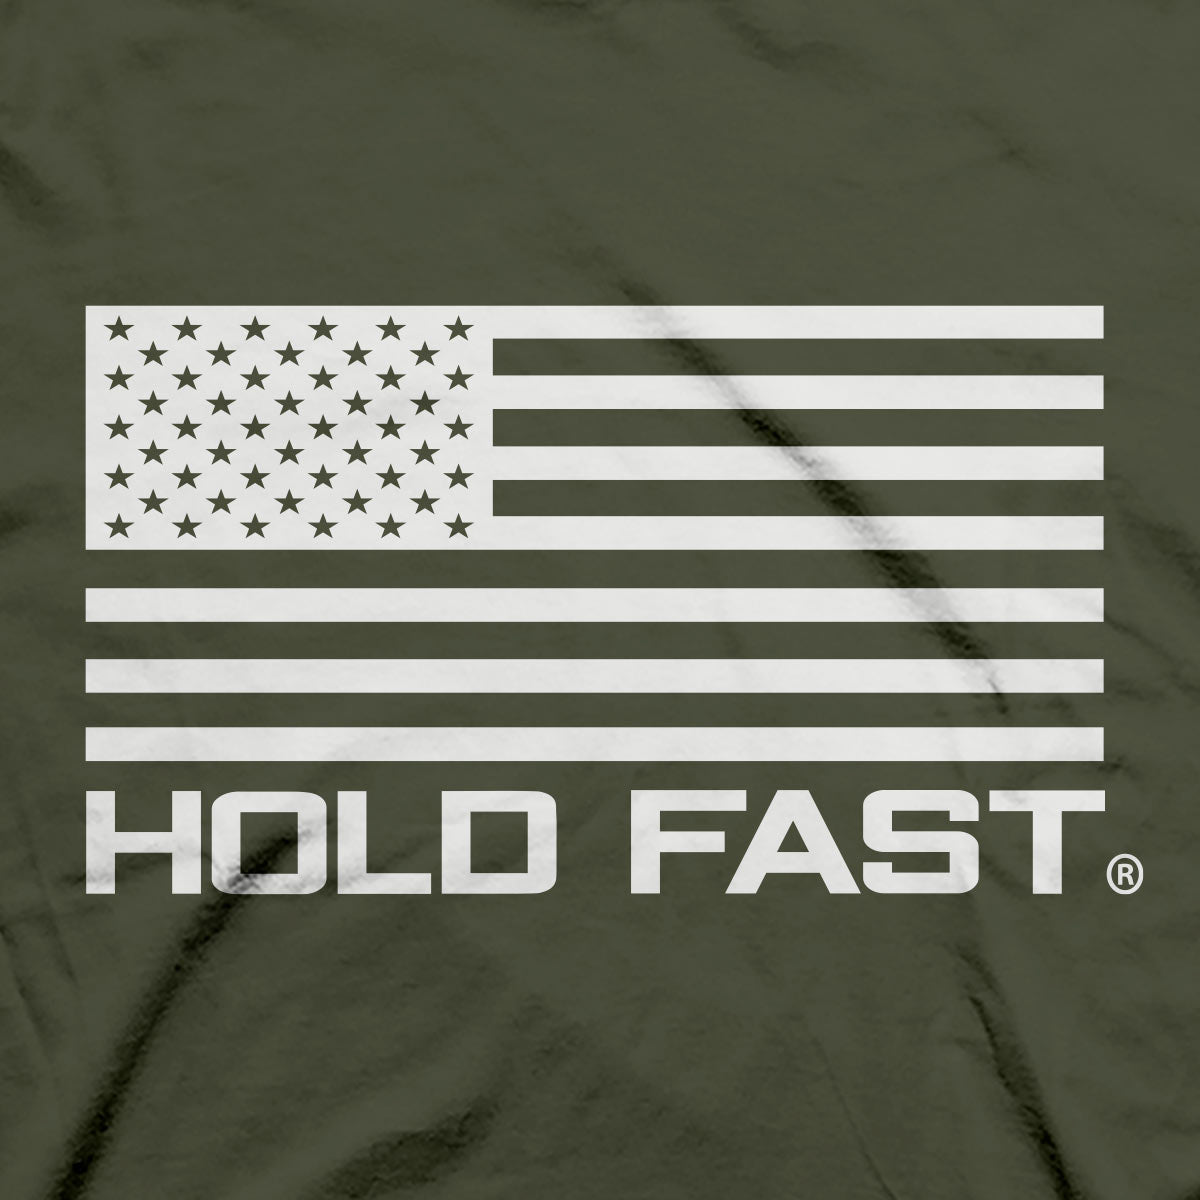 HOLD FAST Mens T-Shirt Thank A Veteran